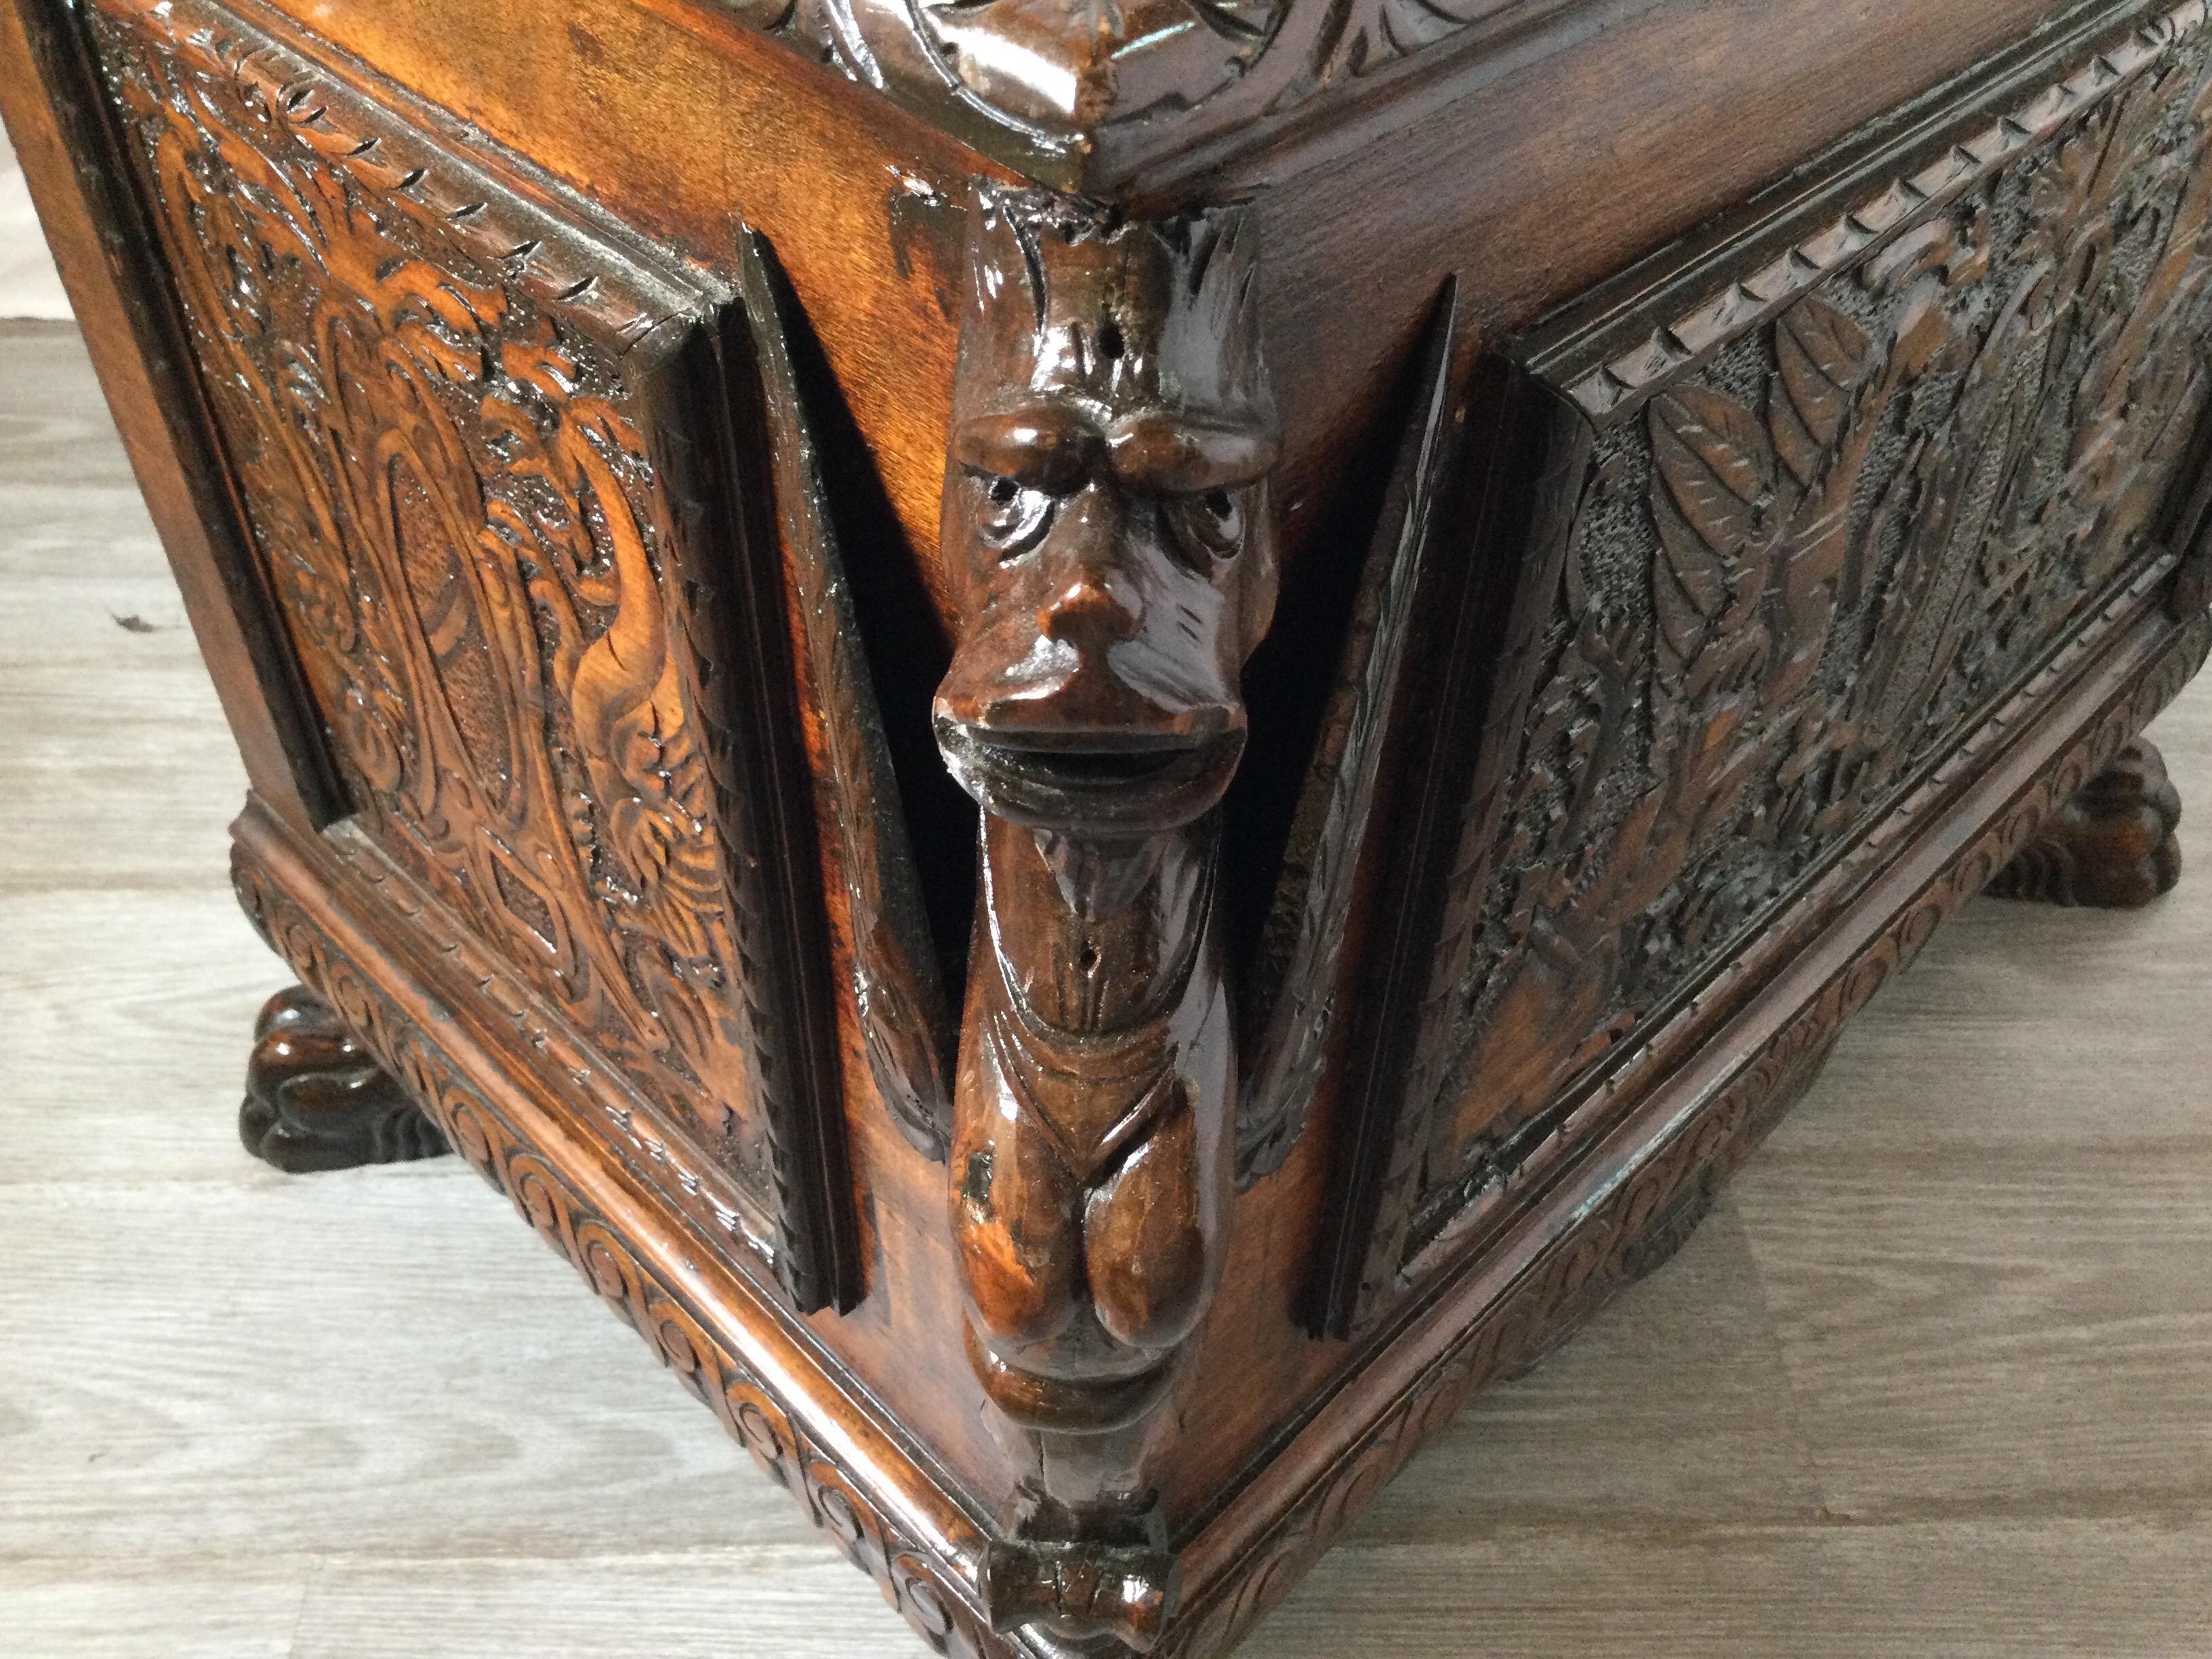 20th Century Antique English Carved Oak Cellarette with Gargoyles and Original Insert